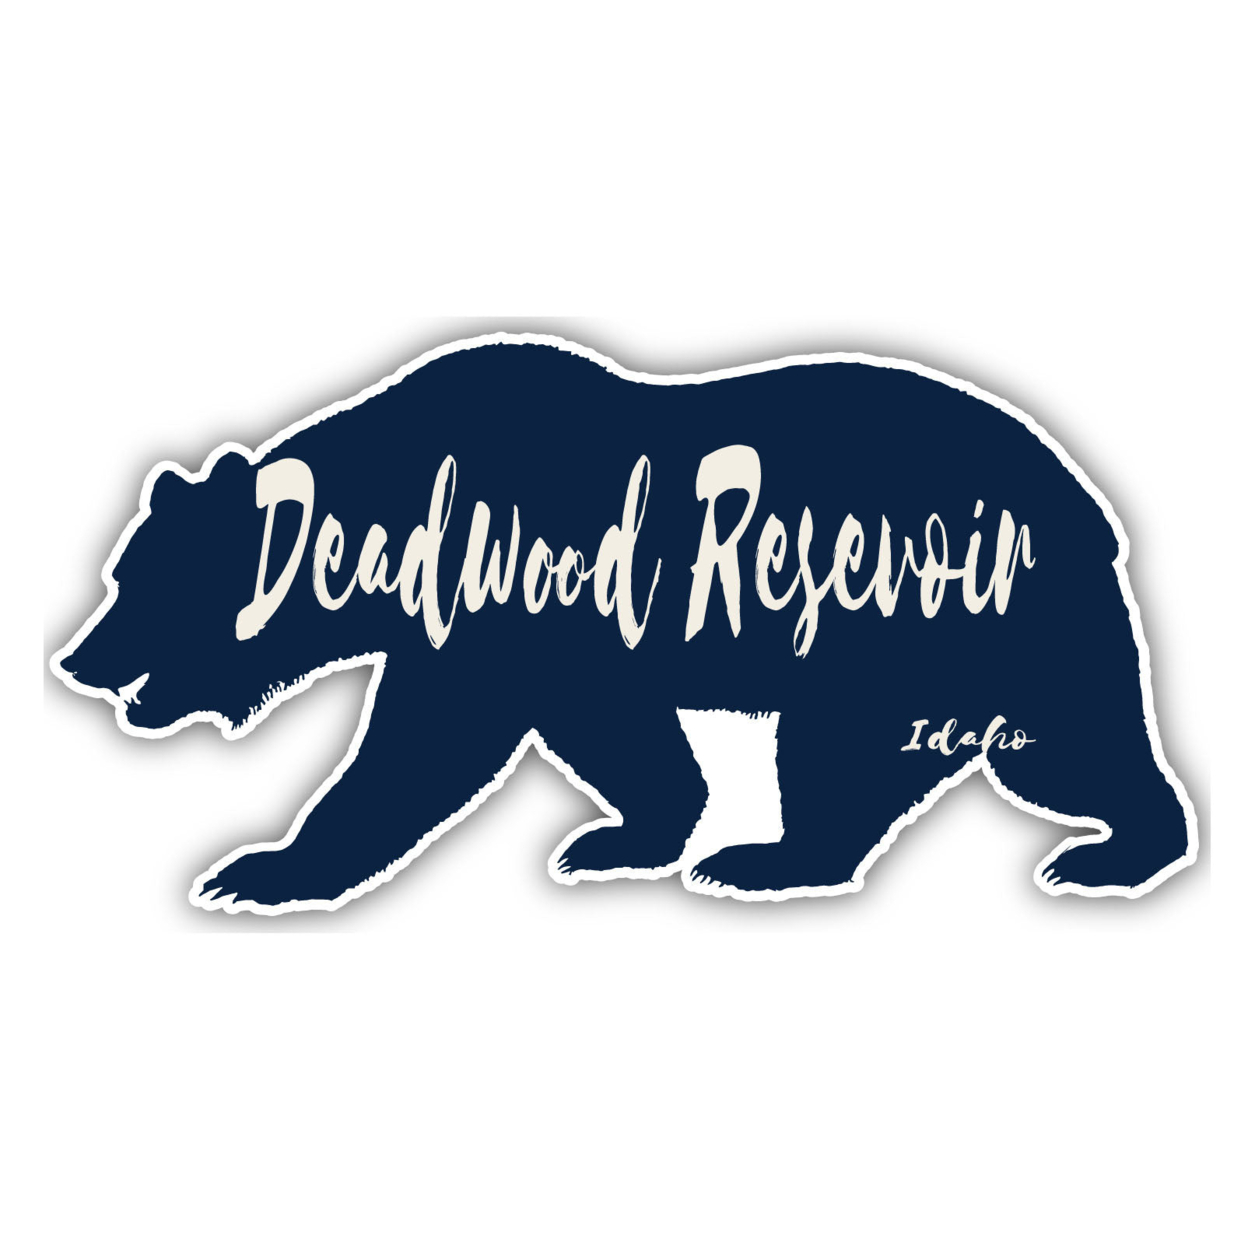 Deadwood Resevoir Idaho Souvenir Decorative Stickers (Choose Theme And Size) - Single Unit, 4-Inch, Bear